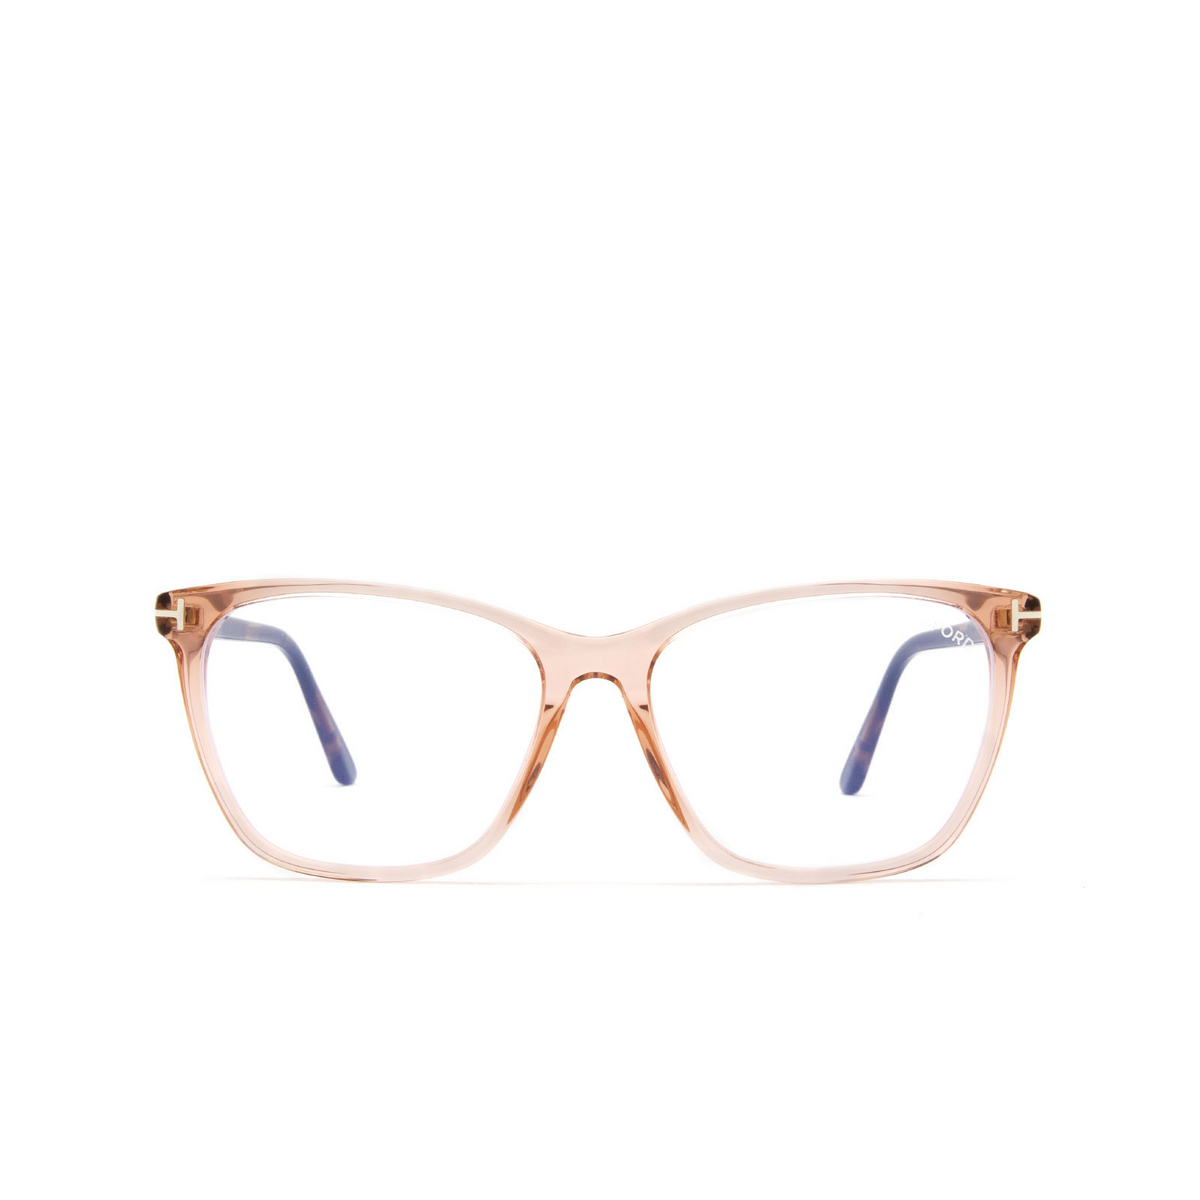 Tom Ford® Square Eyeglasses: FT5762-B color Pink & Havana 074 - front view.